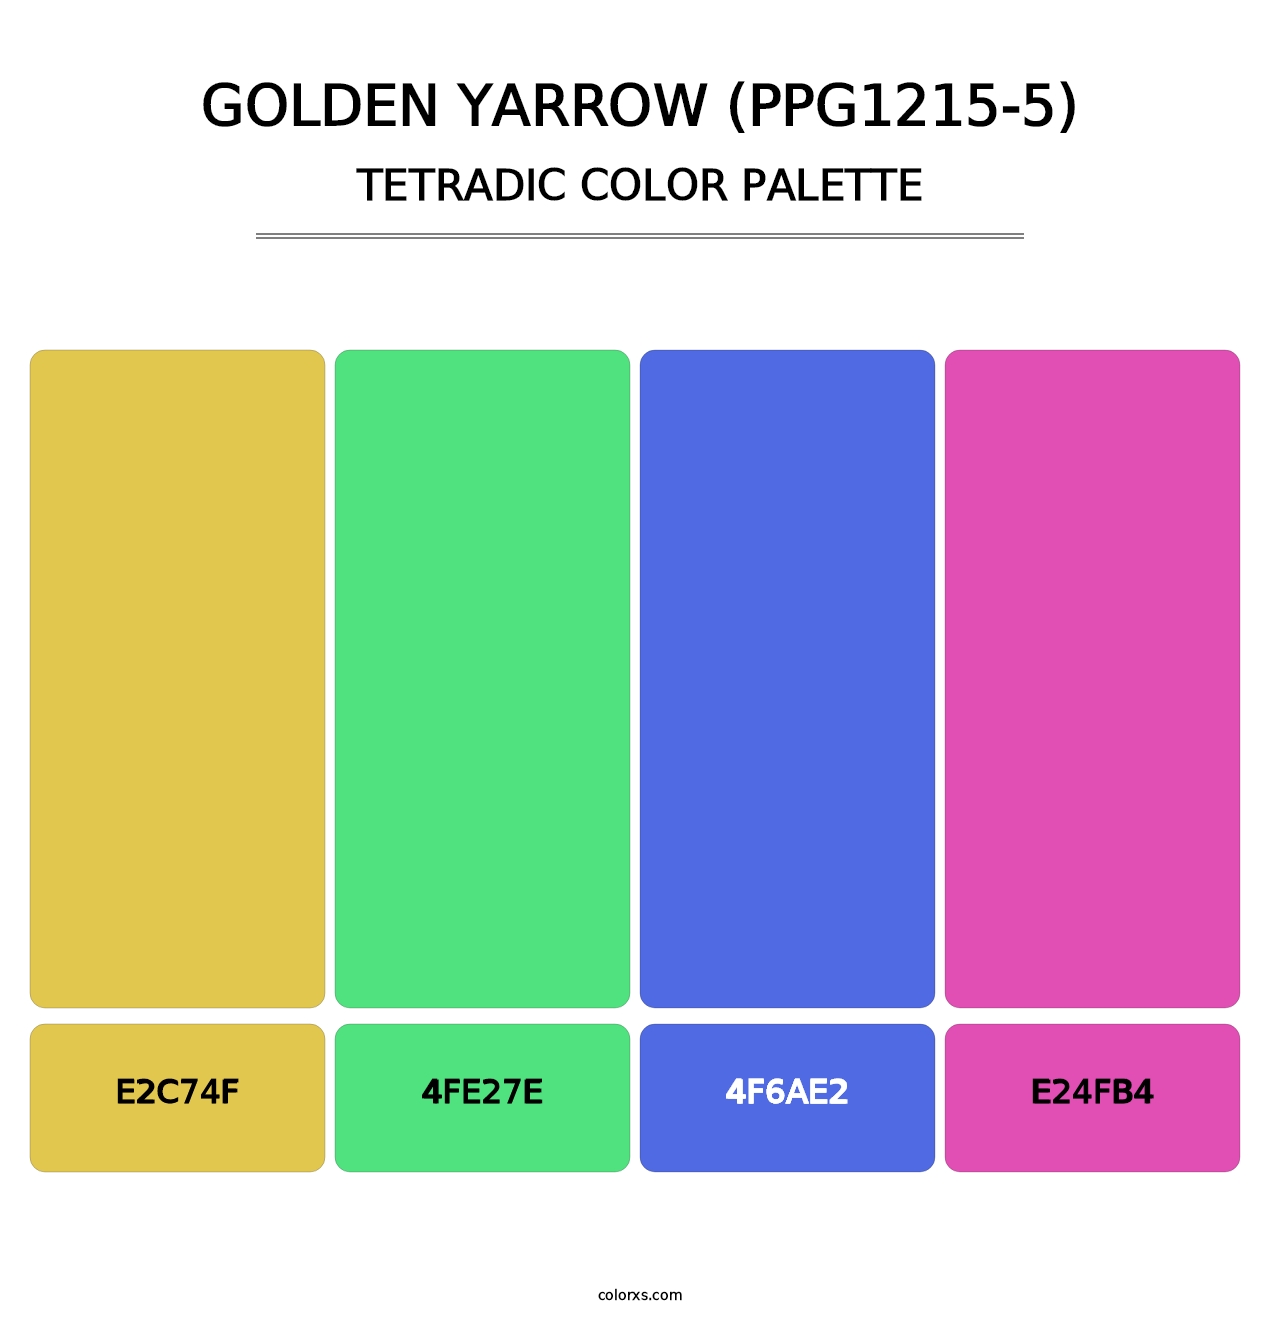 Golden Yarrow (PPG1215-5) - Tetradic Color Palette